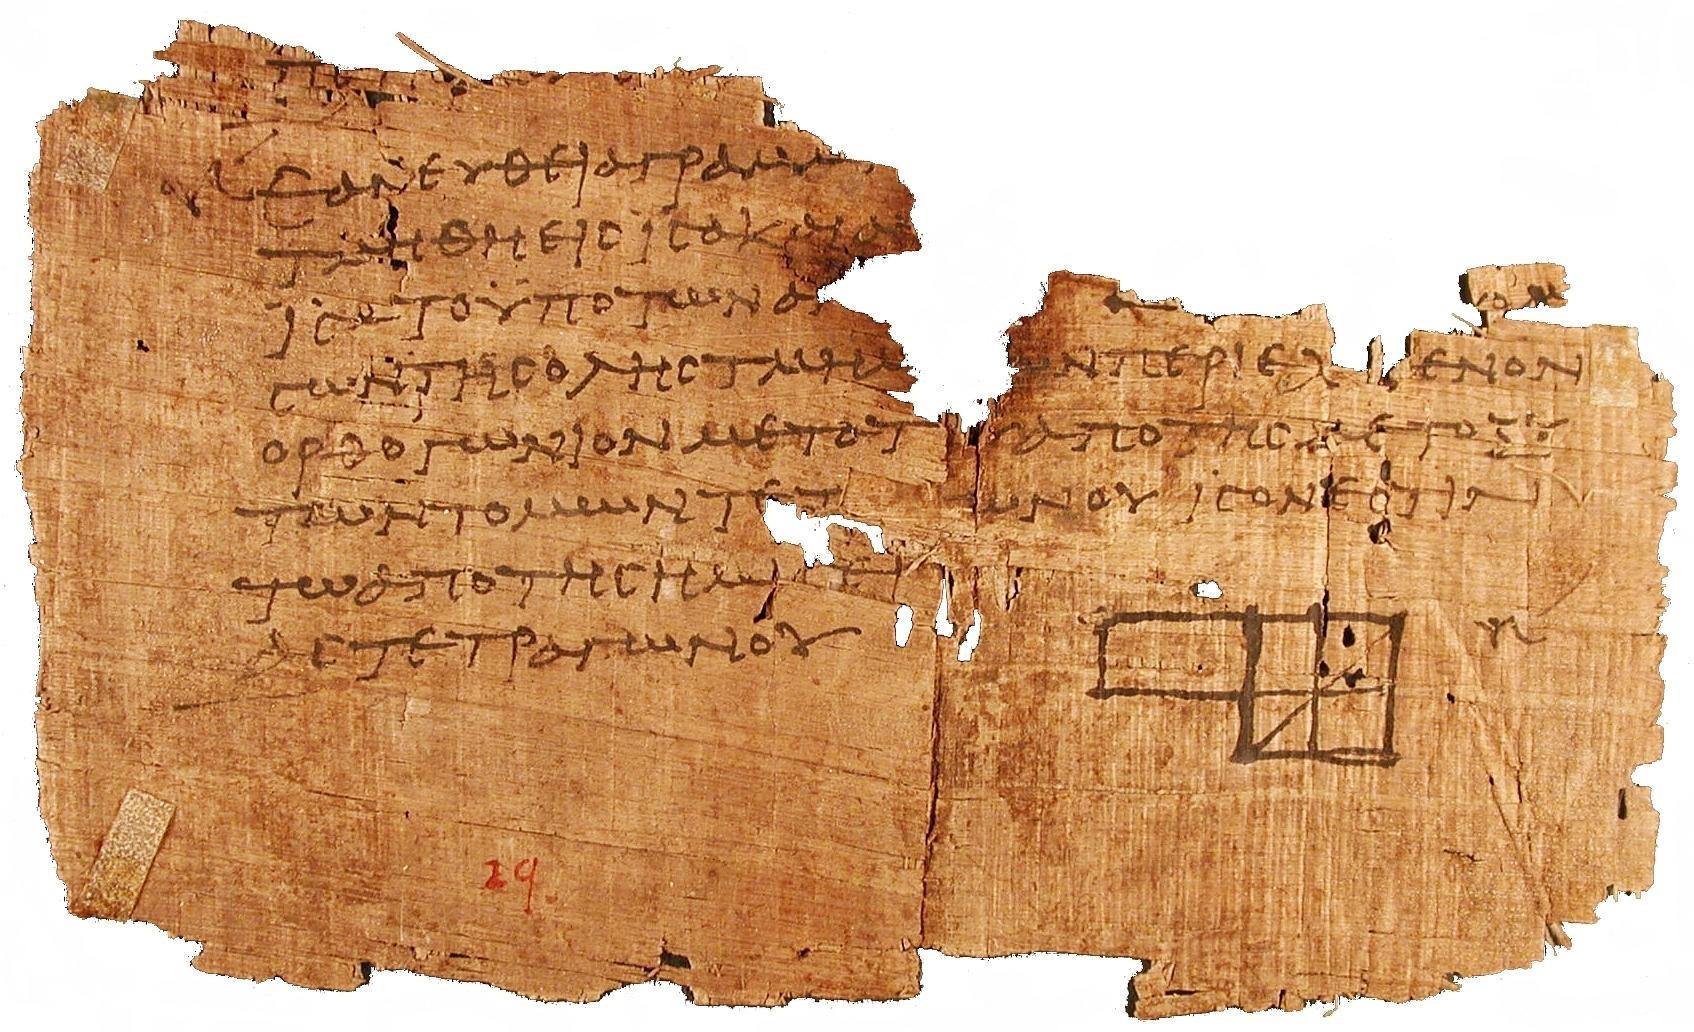 Euklid, Elemente: Papyrusfragment mit Diagramm, gefunden in Oxyrhynchos (P. Oxy. I 29)